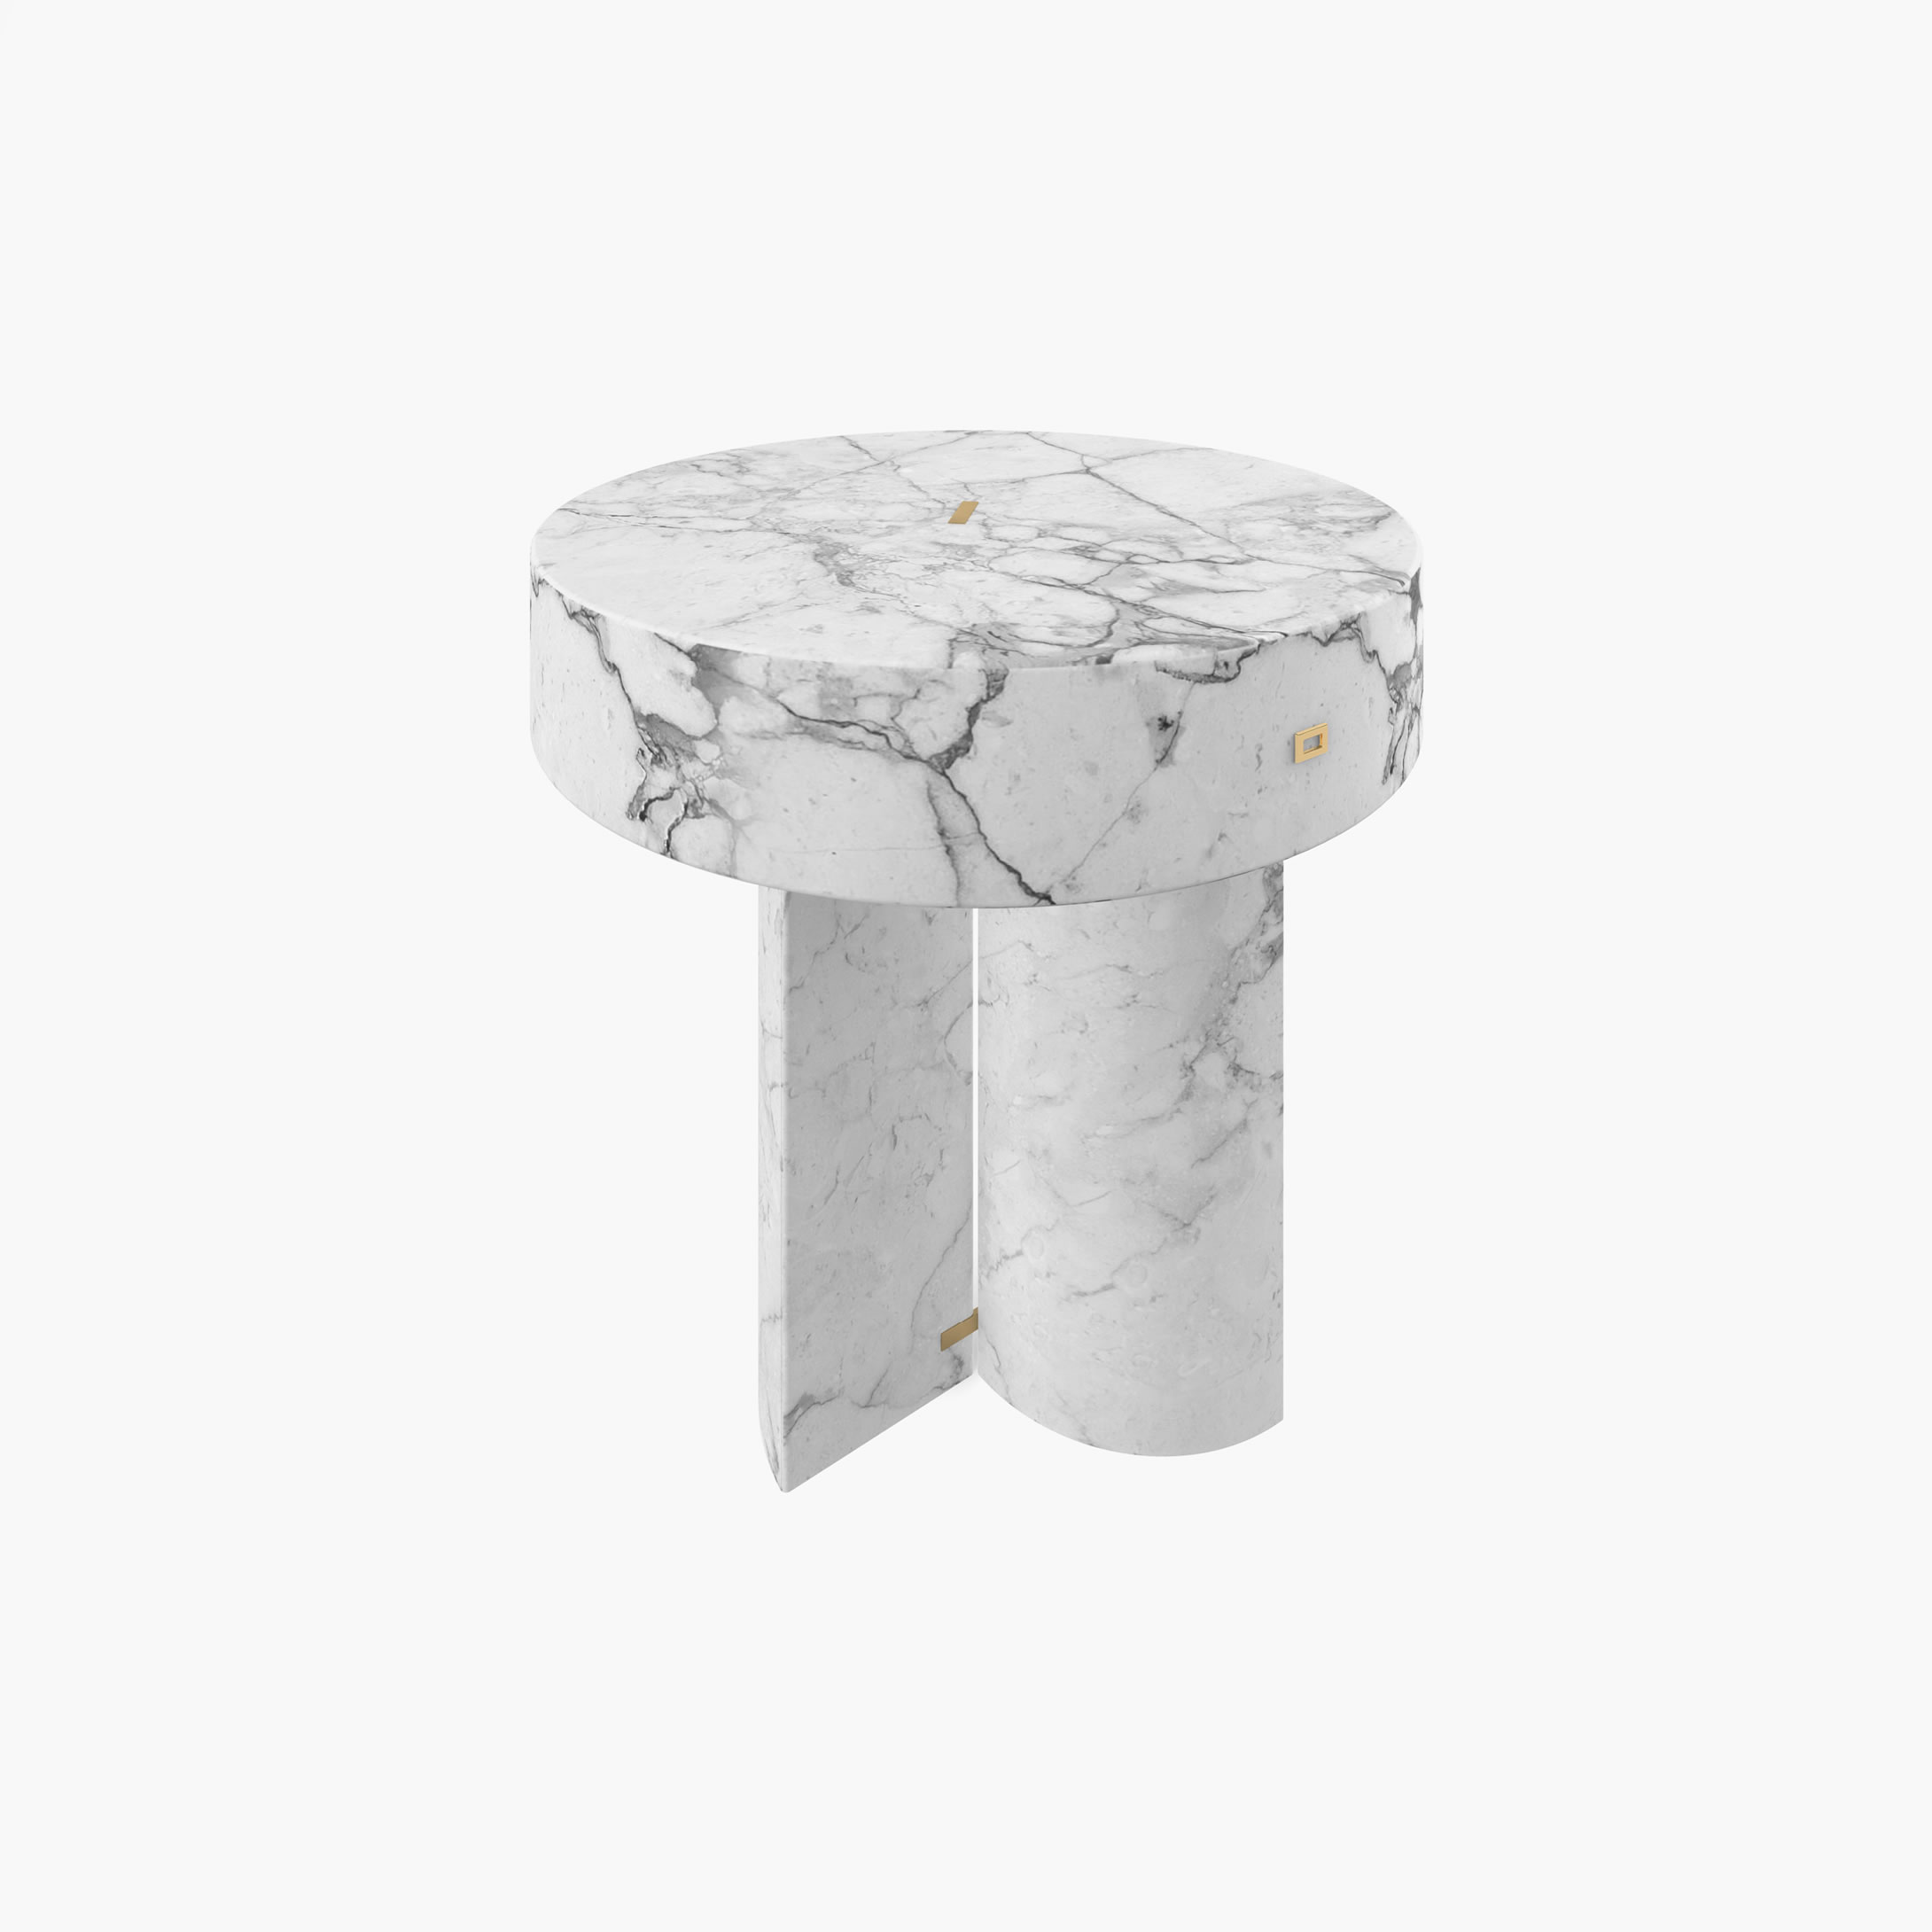 Side Table round Cylinder cuboid prism White Arabescato Marble amazing Living Room designer Side Tables FS 129 1 FELIX SCHWAKE